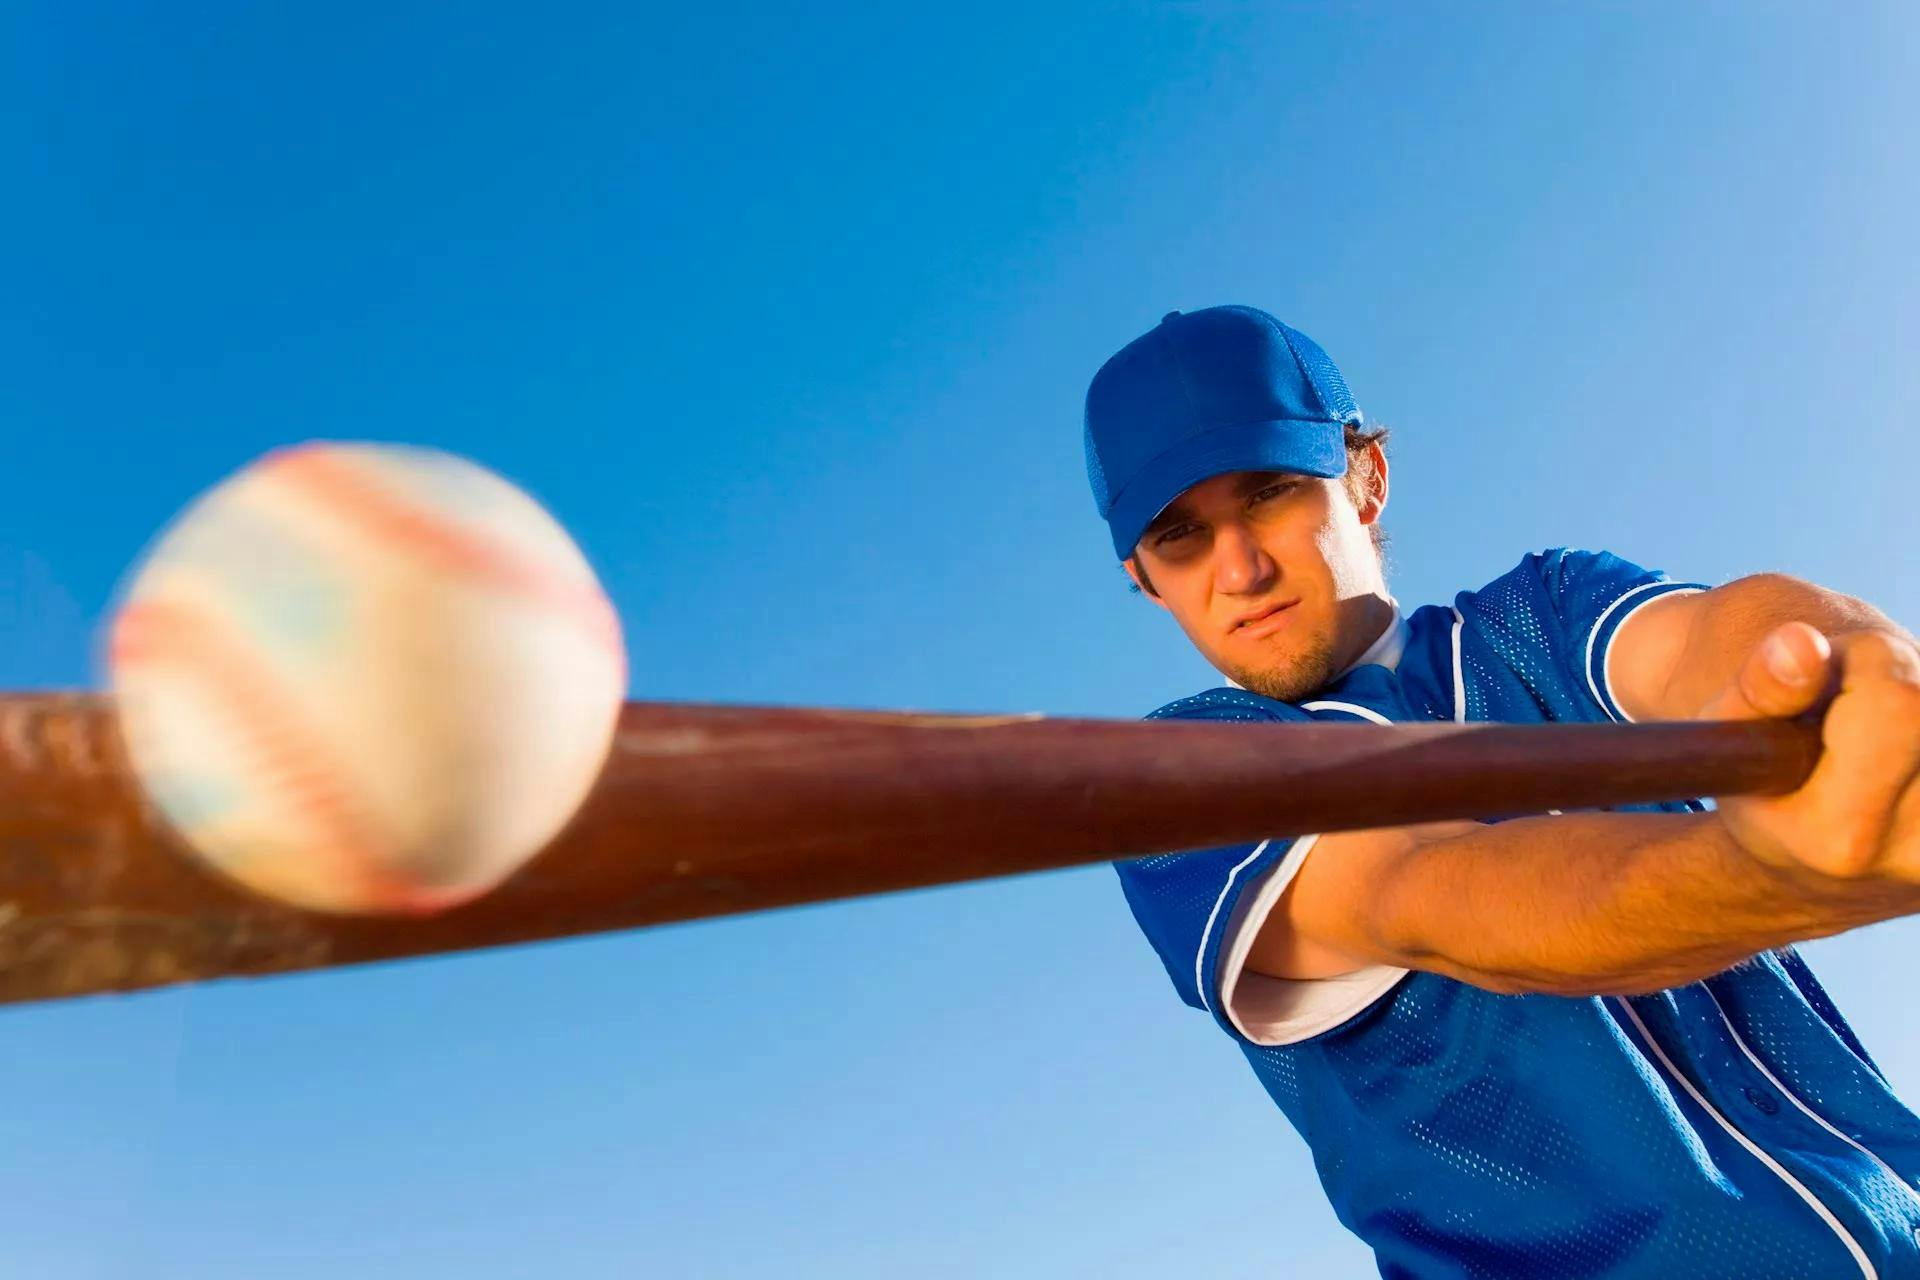 WellSpan Health Sports Medicine program expands reach to provide expert care to The Baseball Warehouse organization